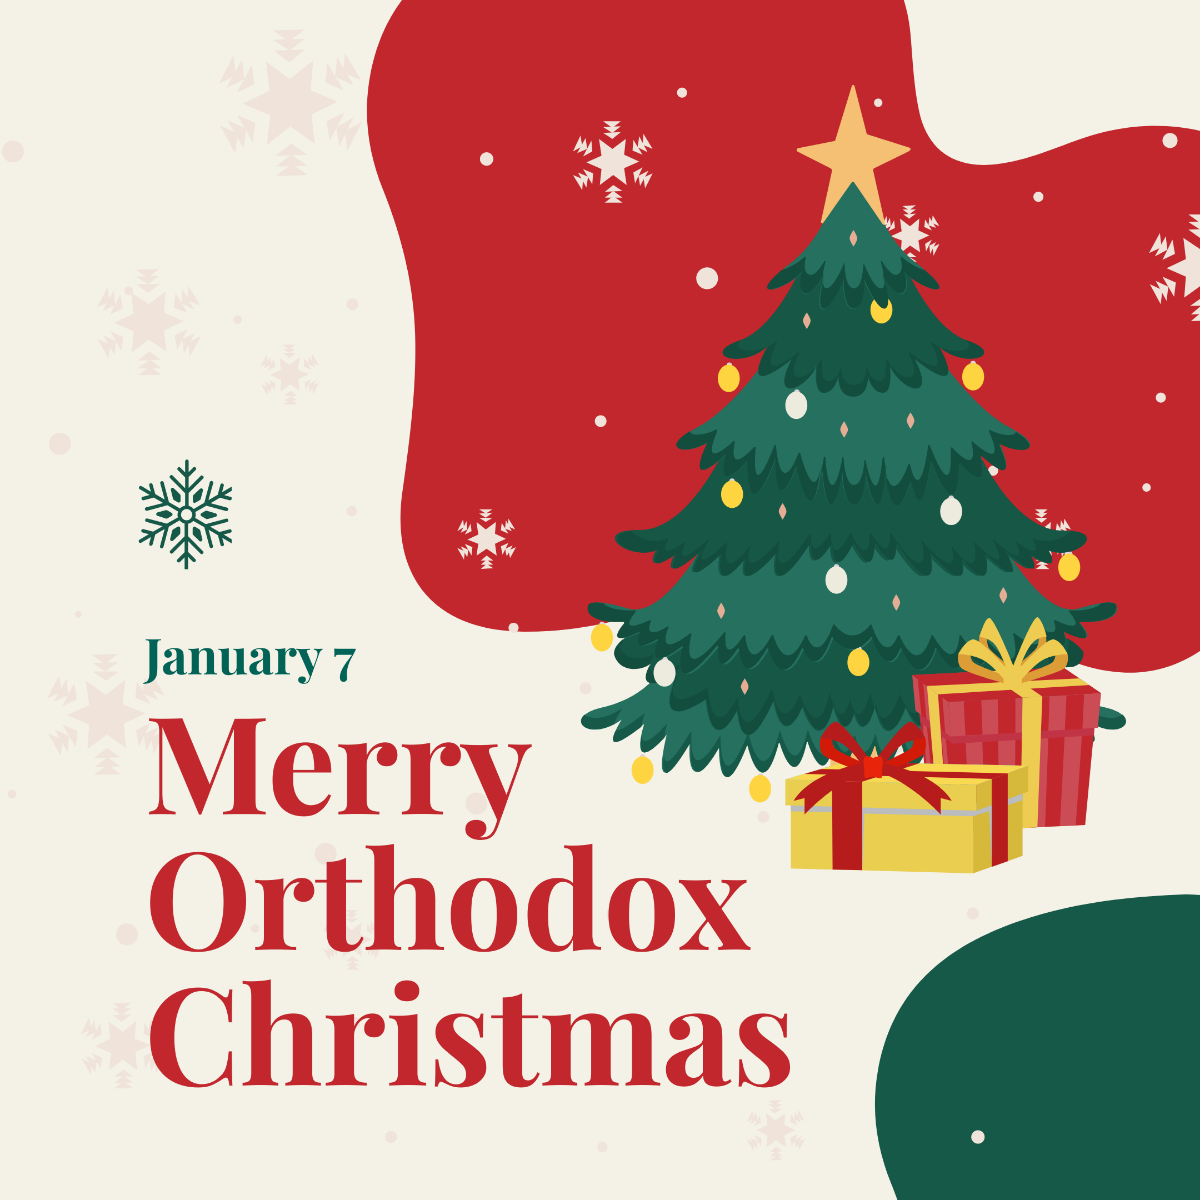 Free Merry Orthodox Christmas Instagram Post Template